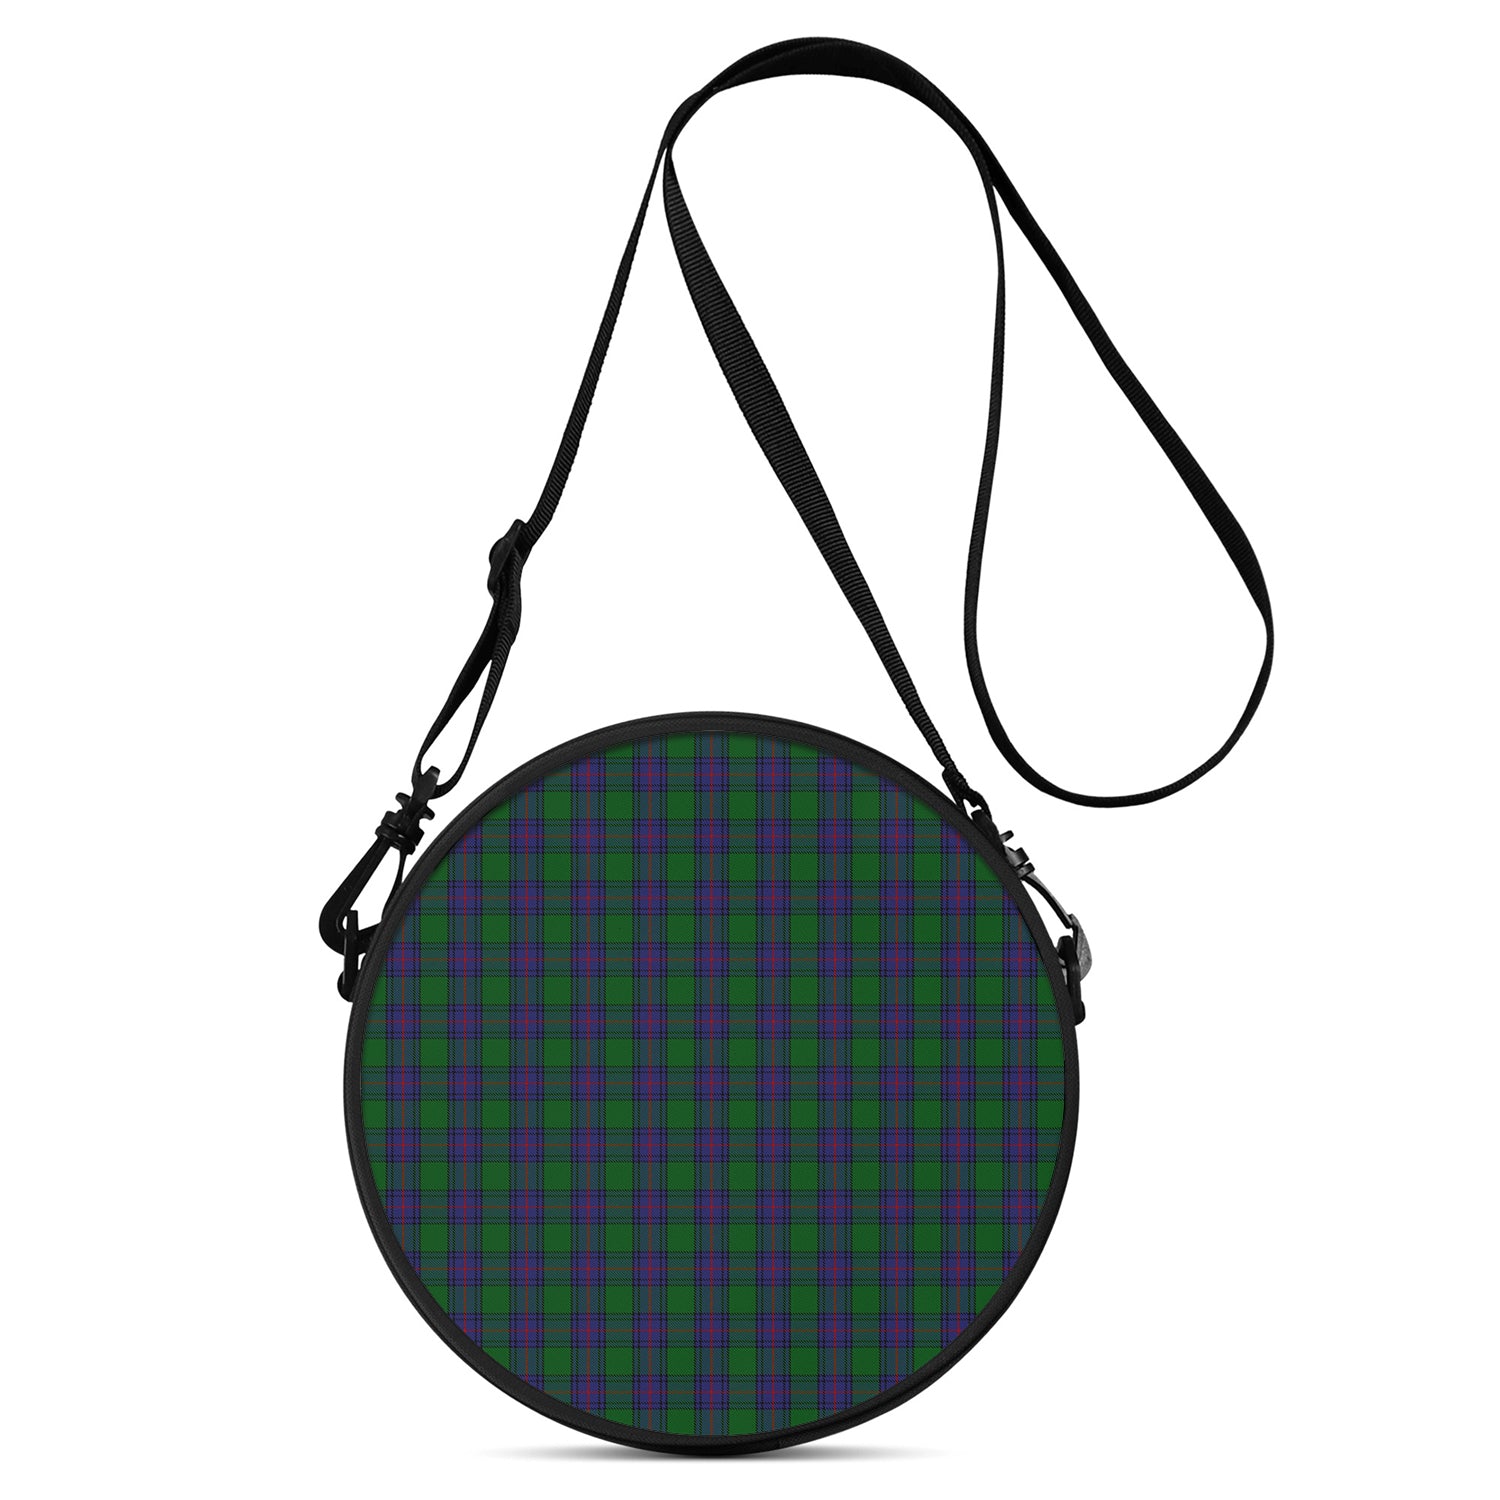 shaw-tartan-round-satchel-bags